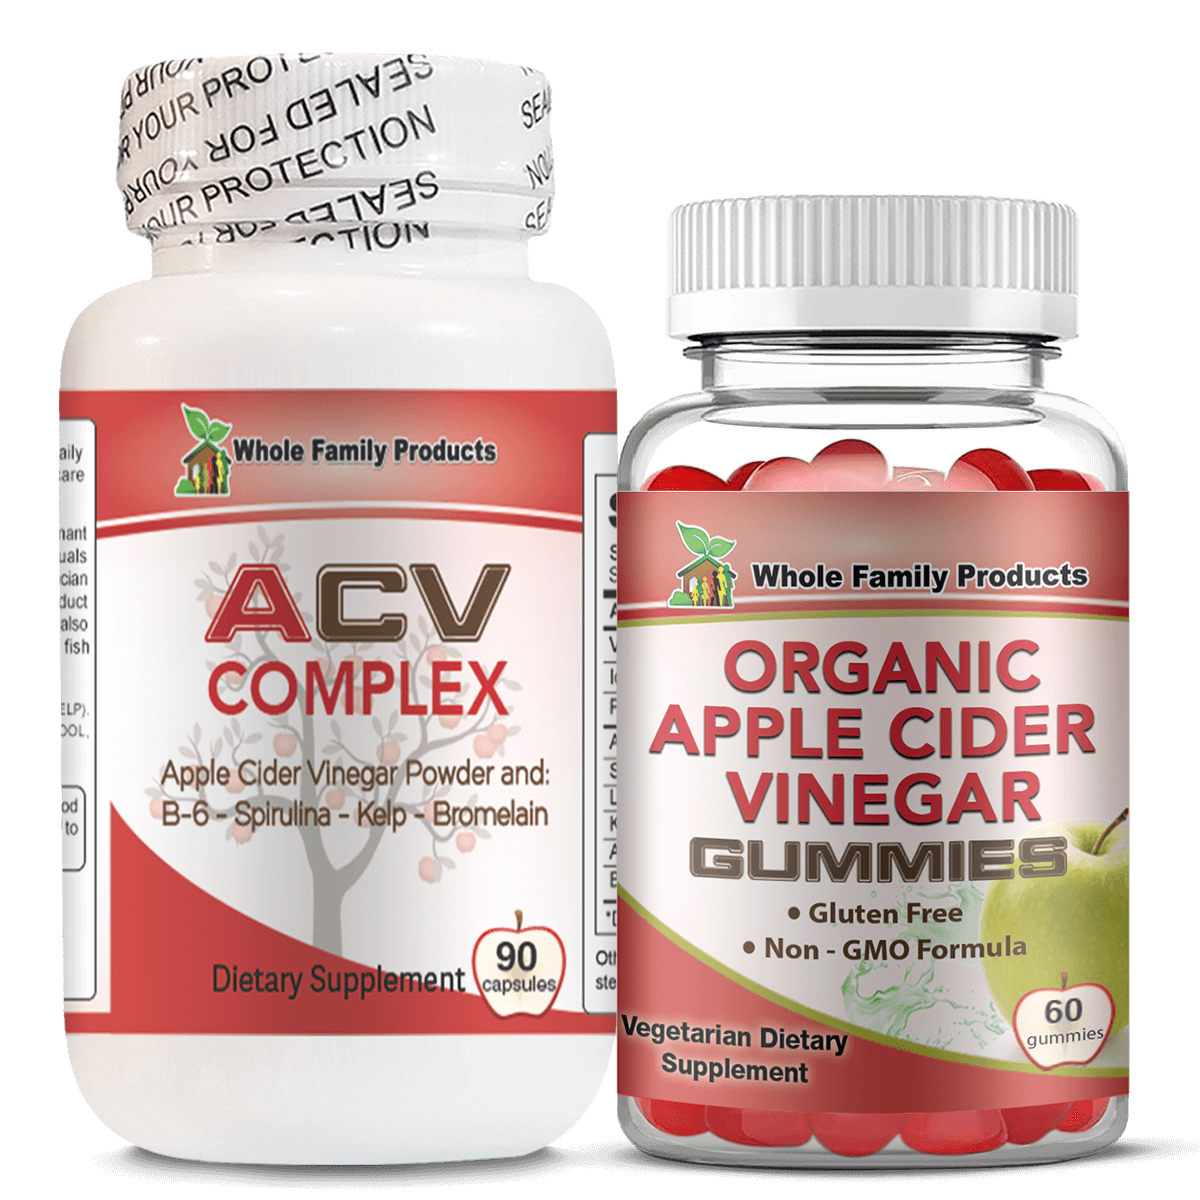 Organic Apple Cider Vinegar Gummies and ACV Complex (1)